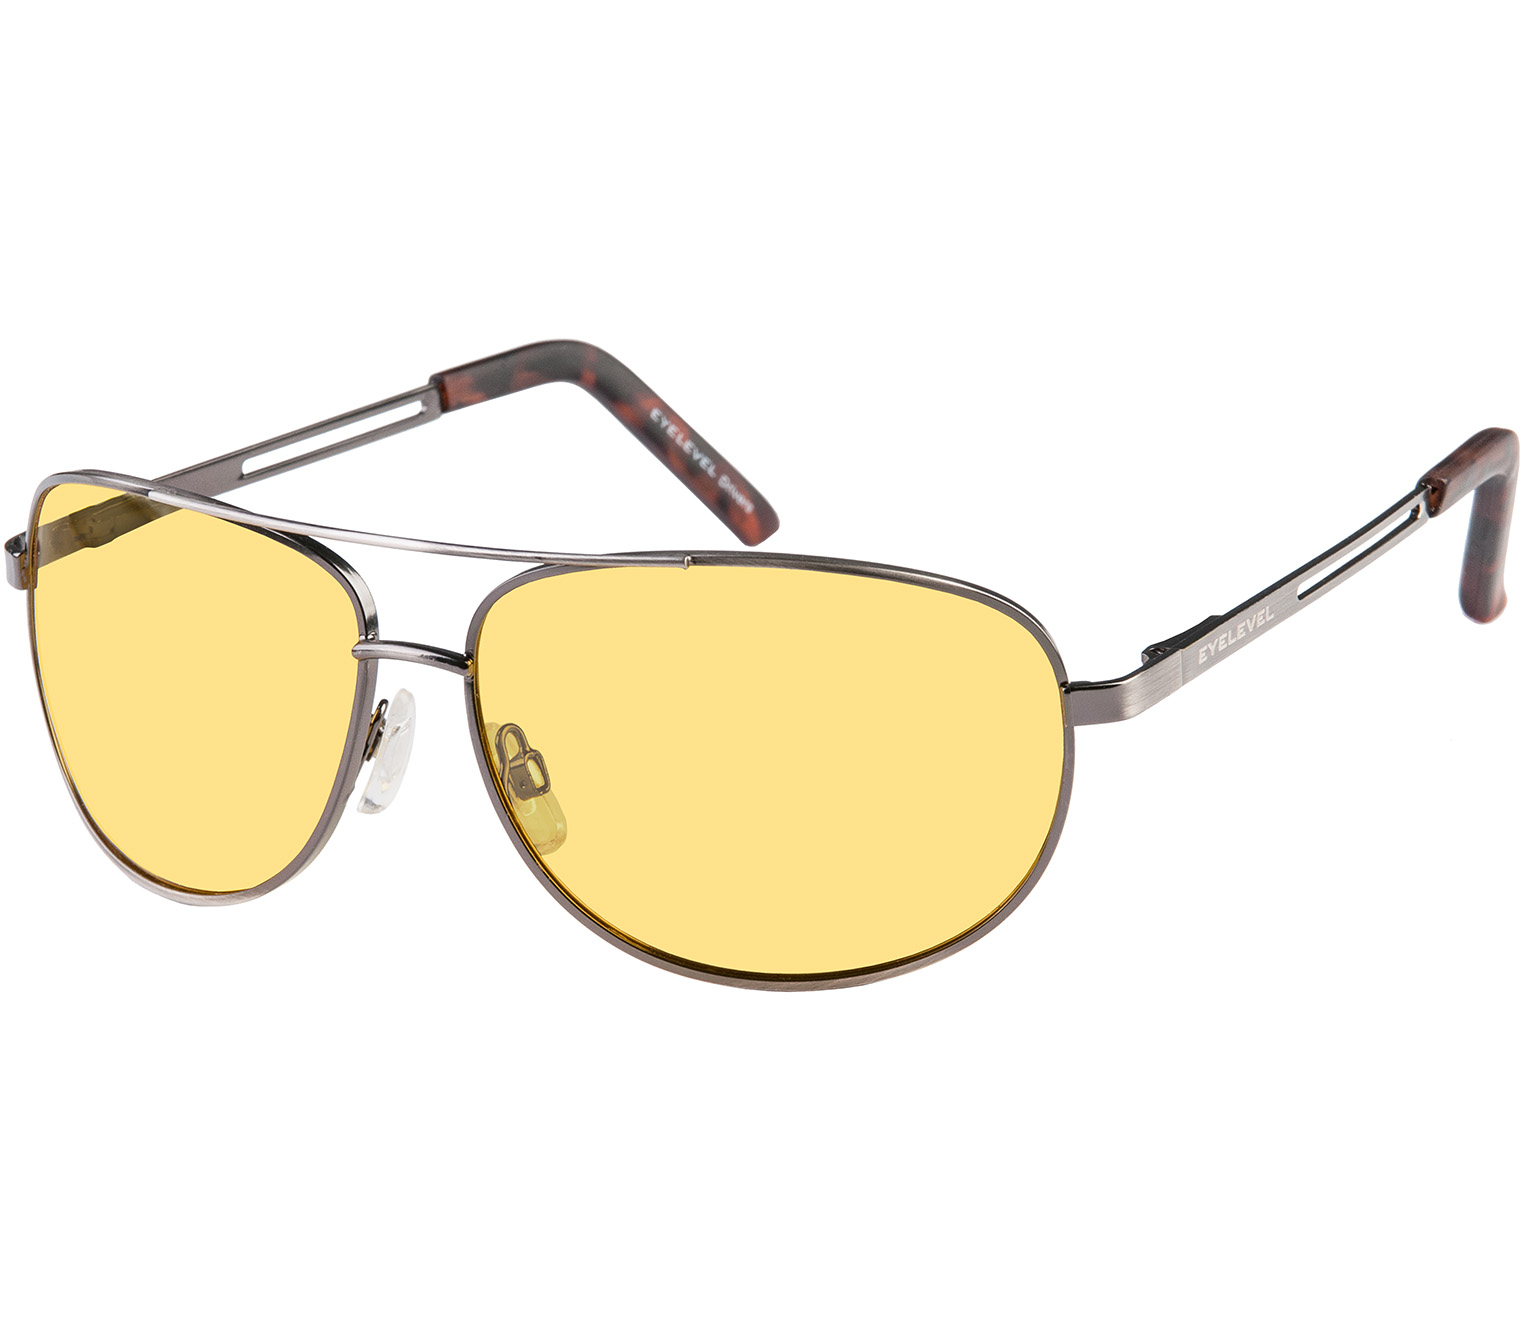 Main Image (Angle) - Detroit (Gunmetal) Sunglasses